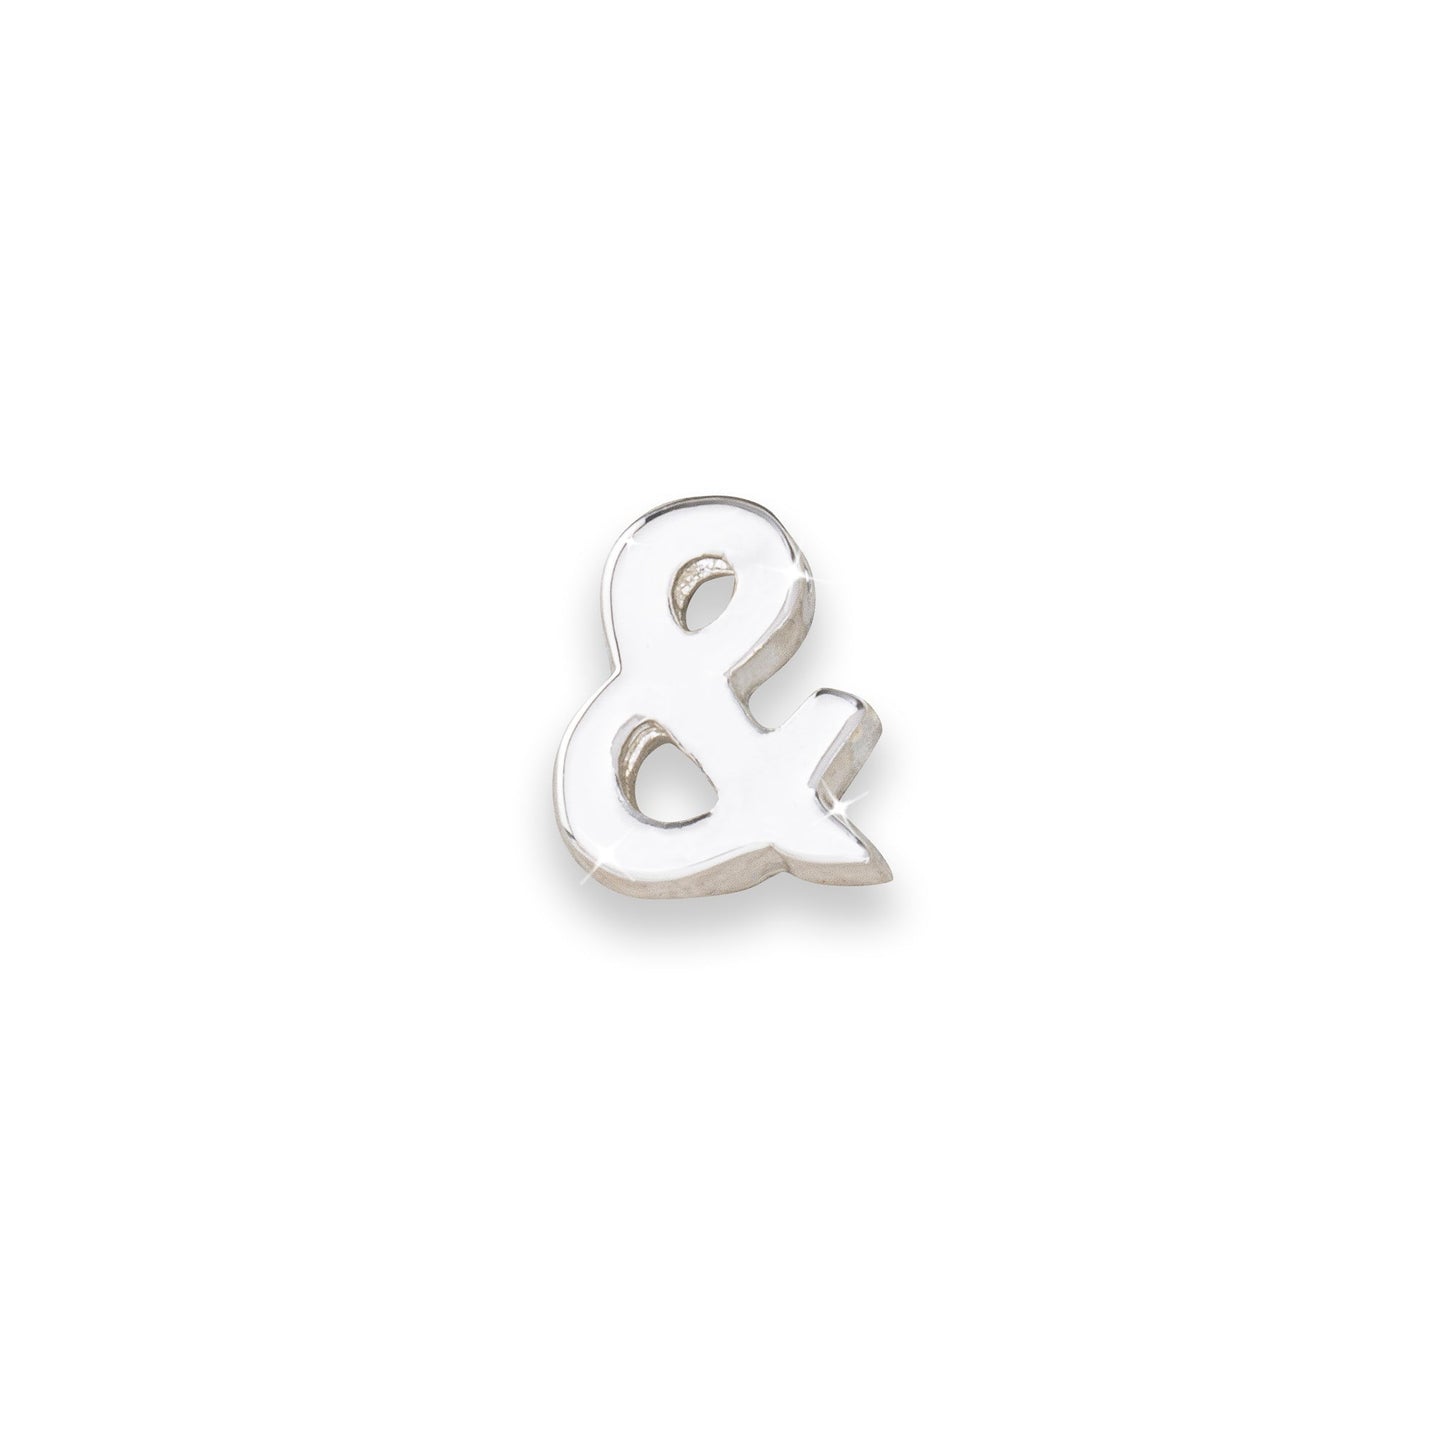 Silver ampersand & monogram charm for necklaces & bracelets